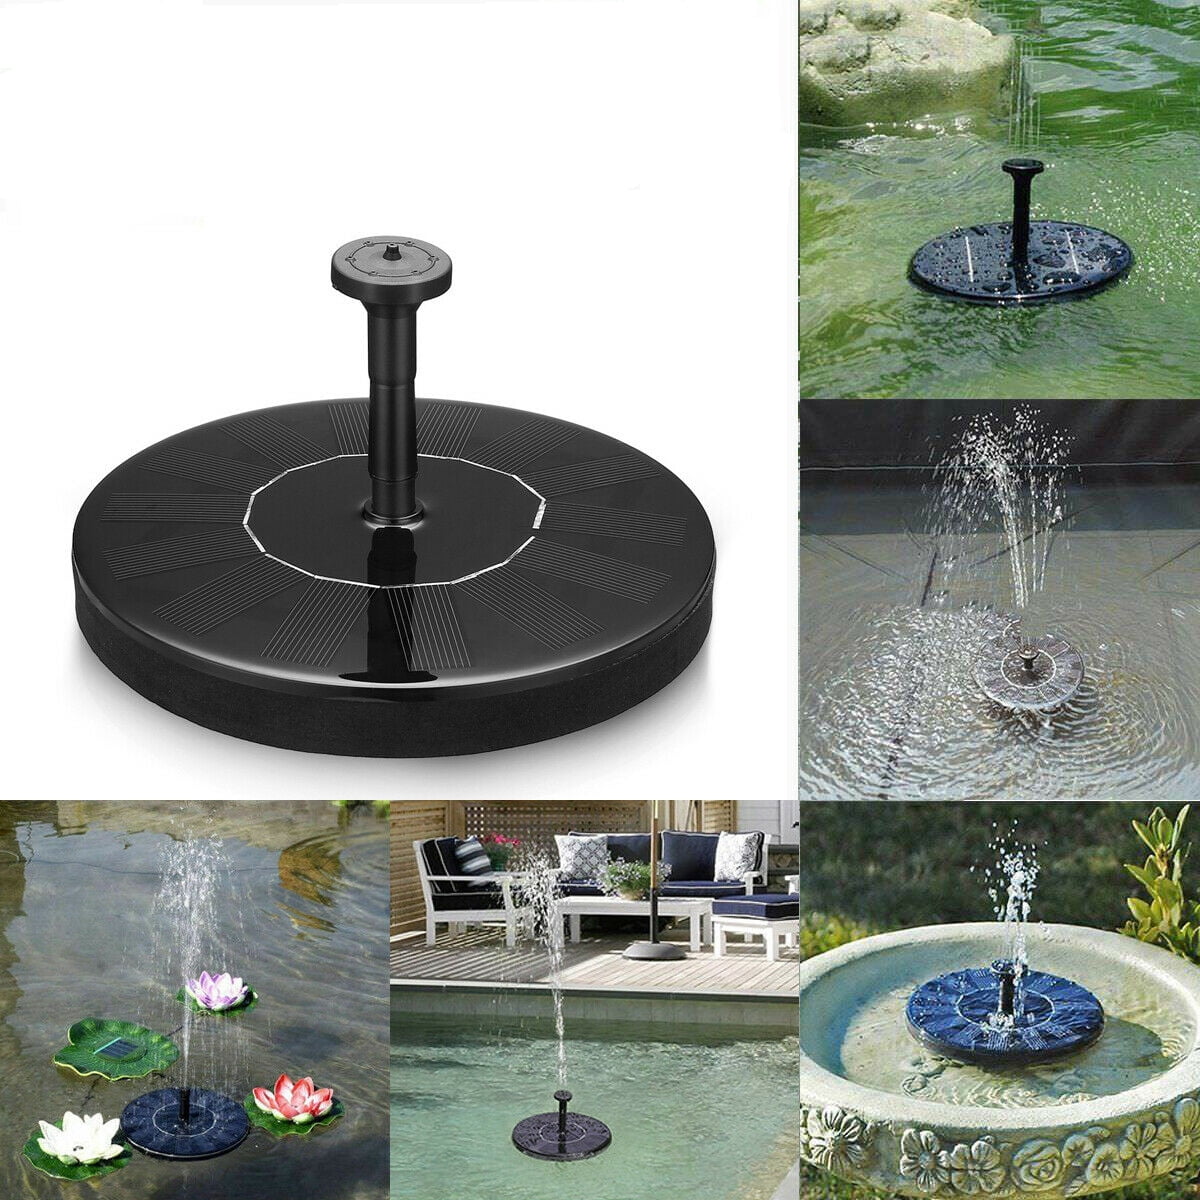 Outdoor Solar Powered Floating Bird Bath Water Fountain Pump Garden Pond Pool # 